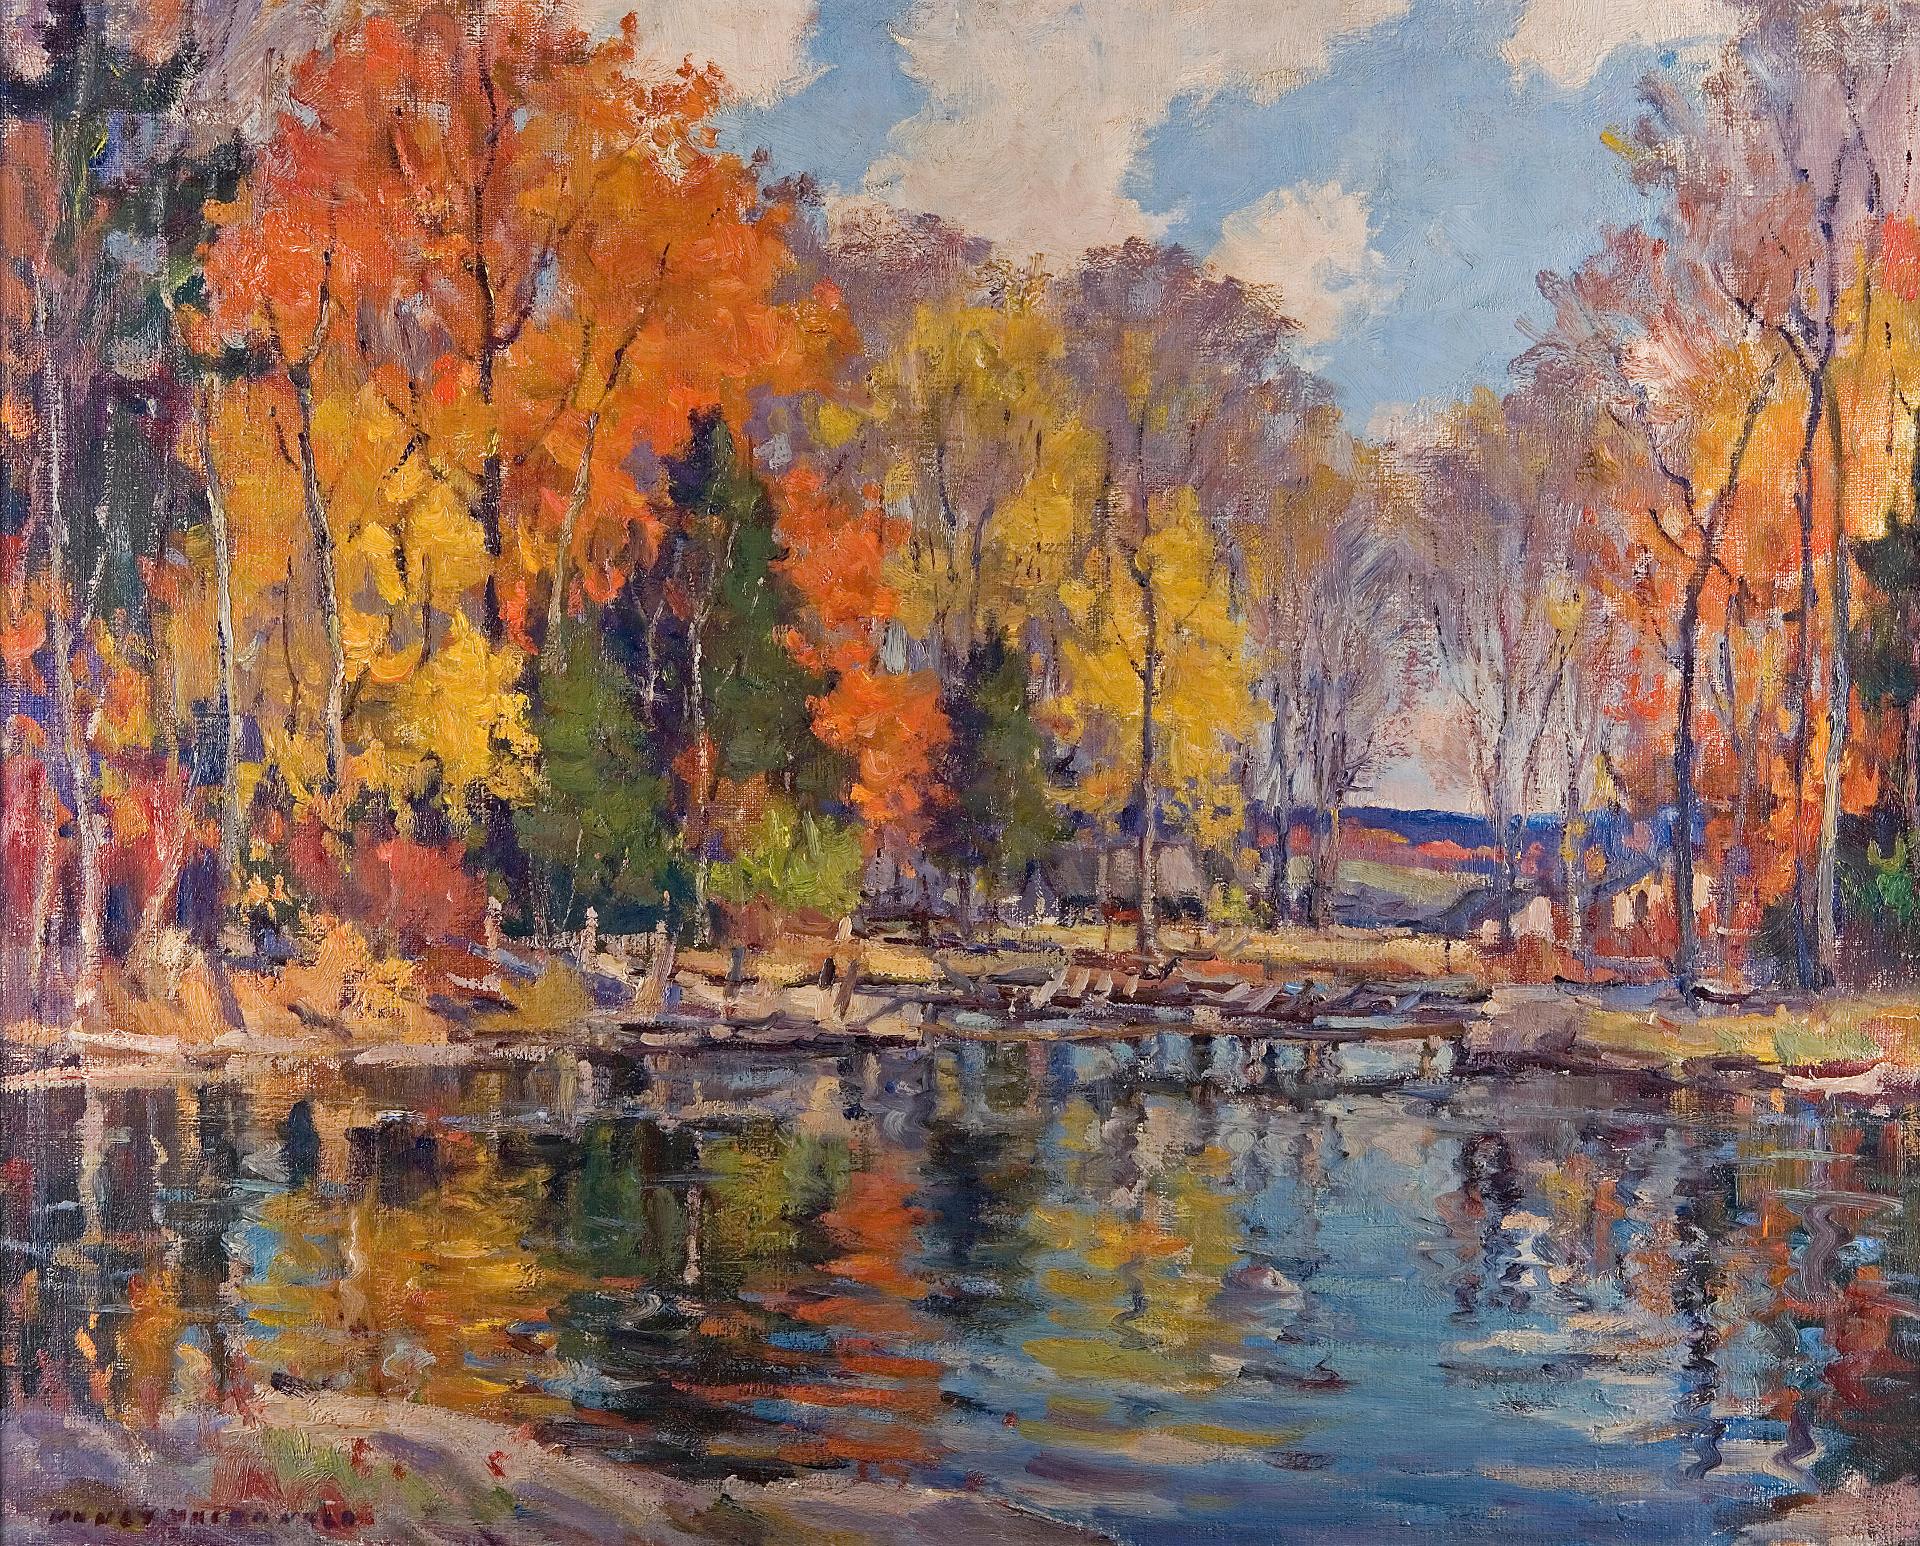 Manly Edward MacDonald (1889-1971) - Autumn lakeside view